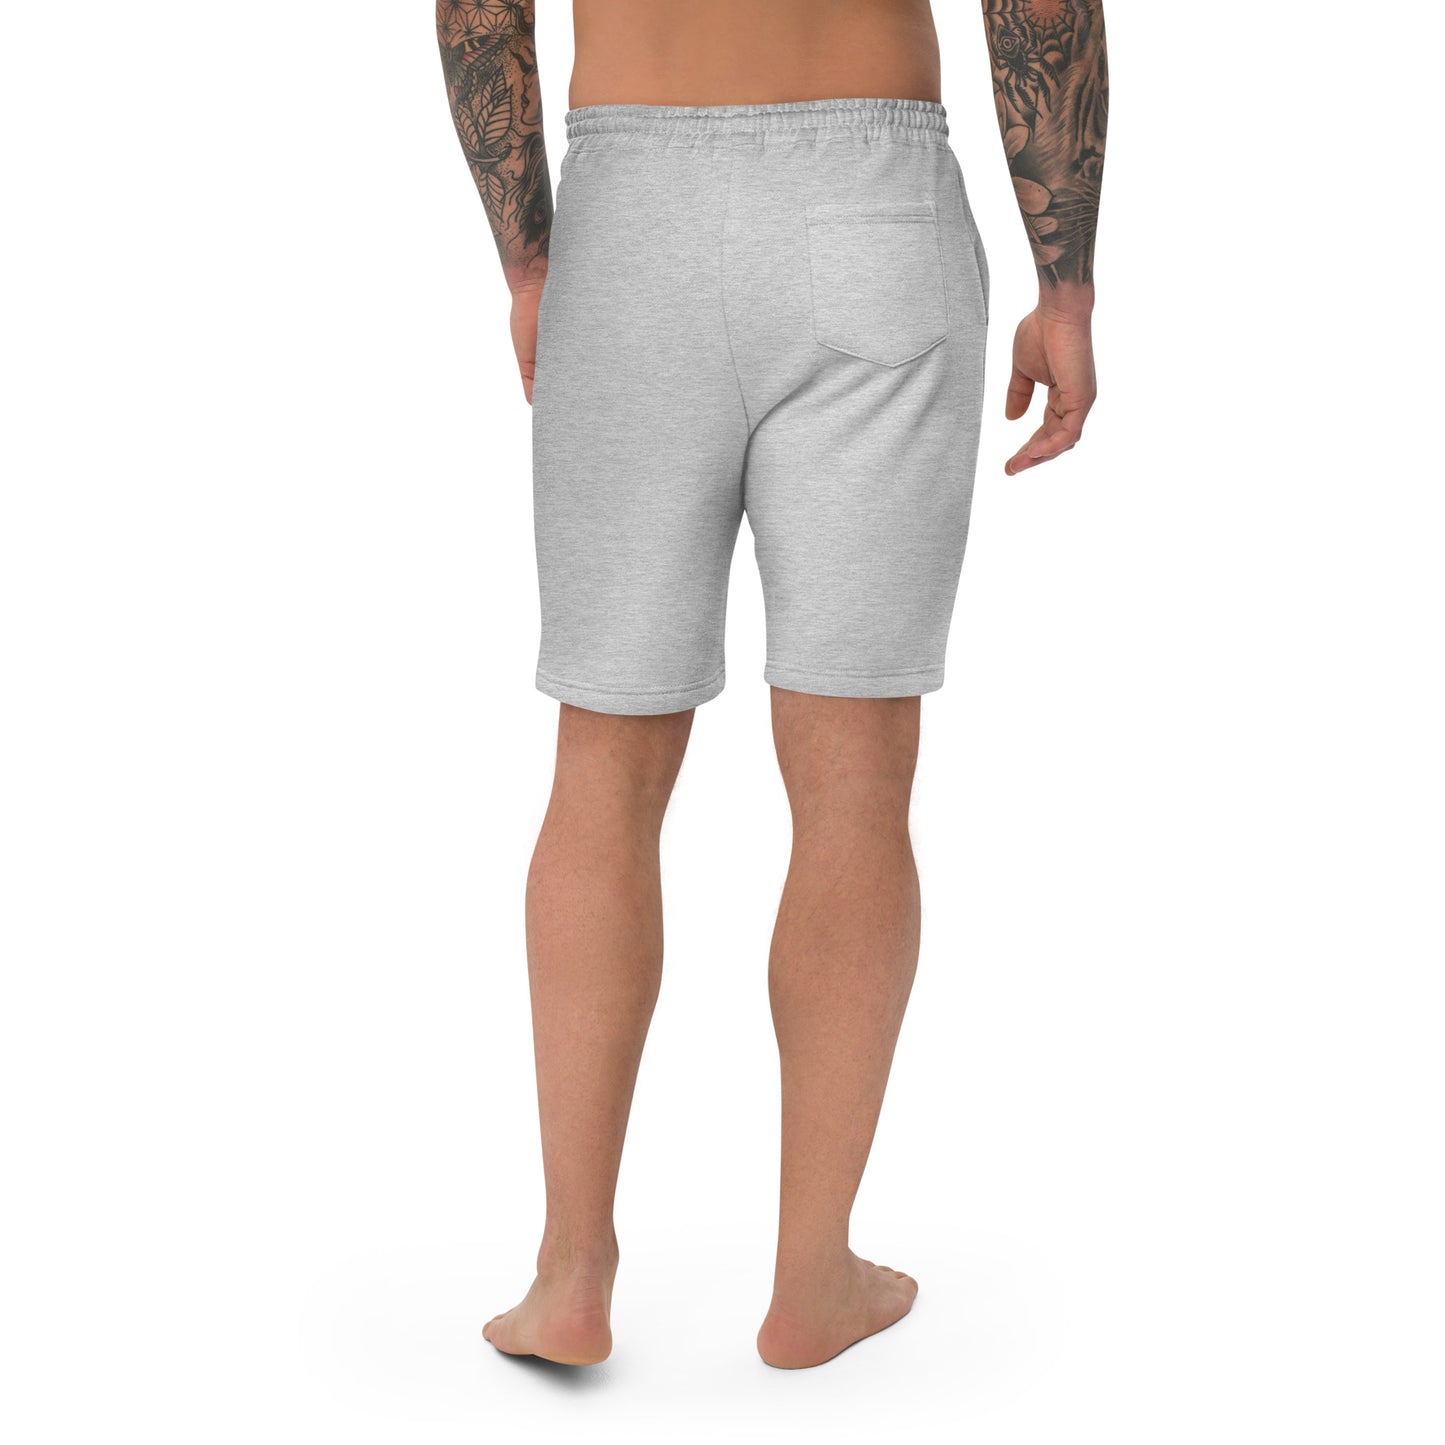 Men's fleece shorts IRN LEGACY